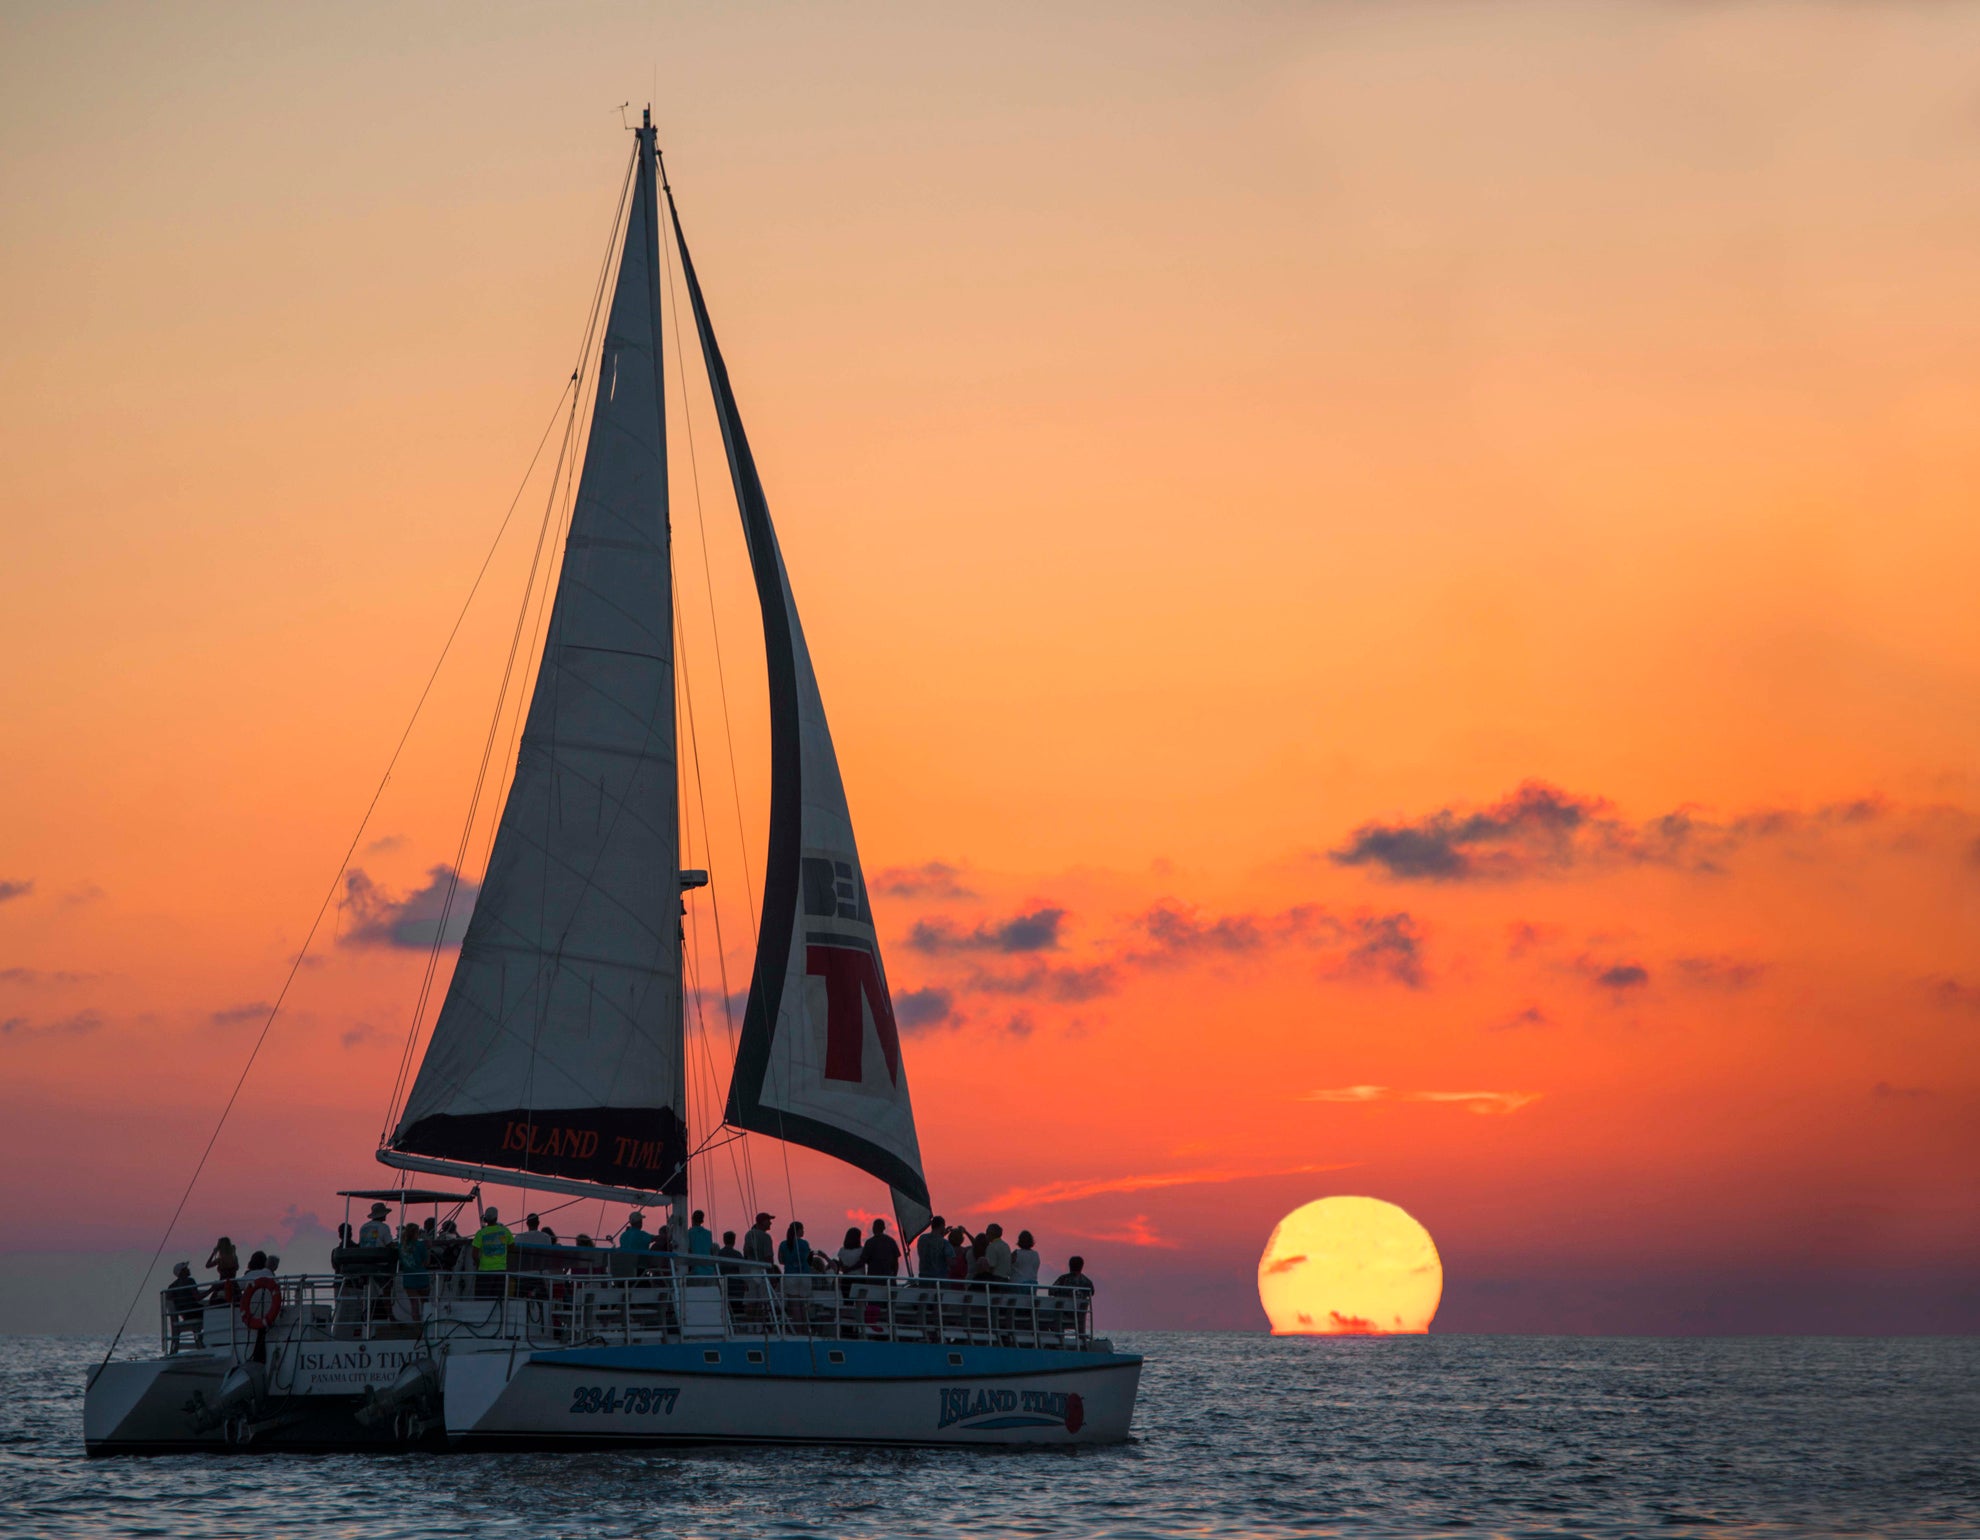 Take an Island Time Sunset Cruise